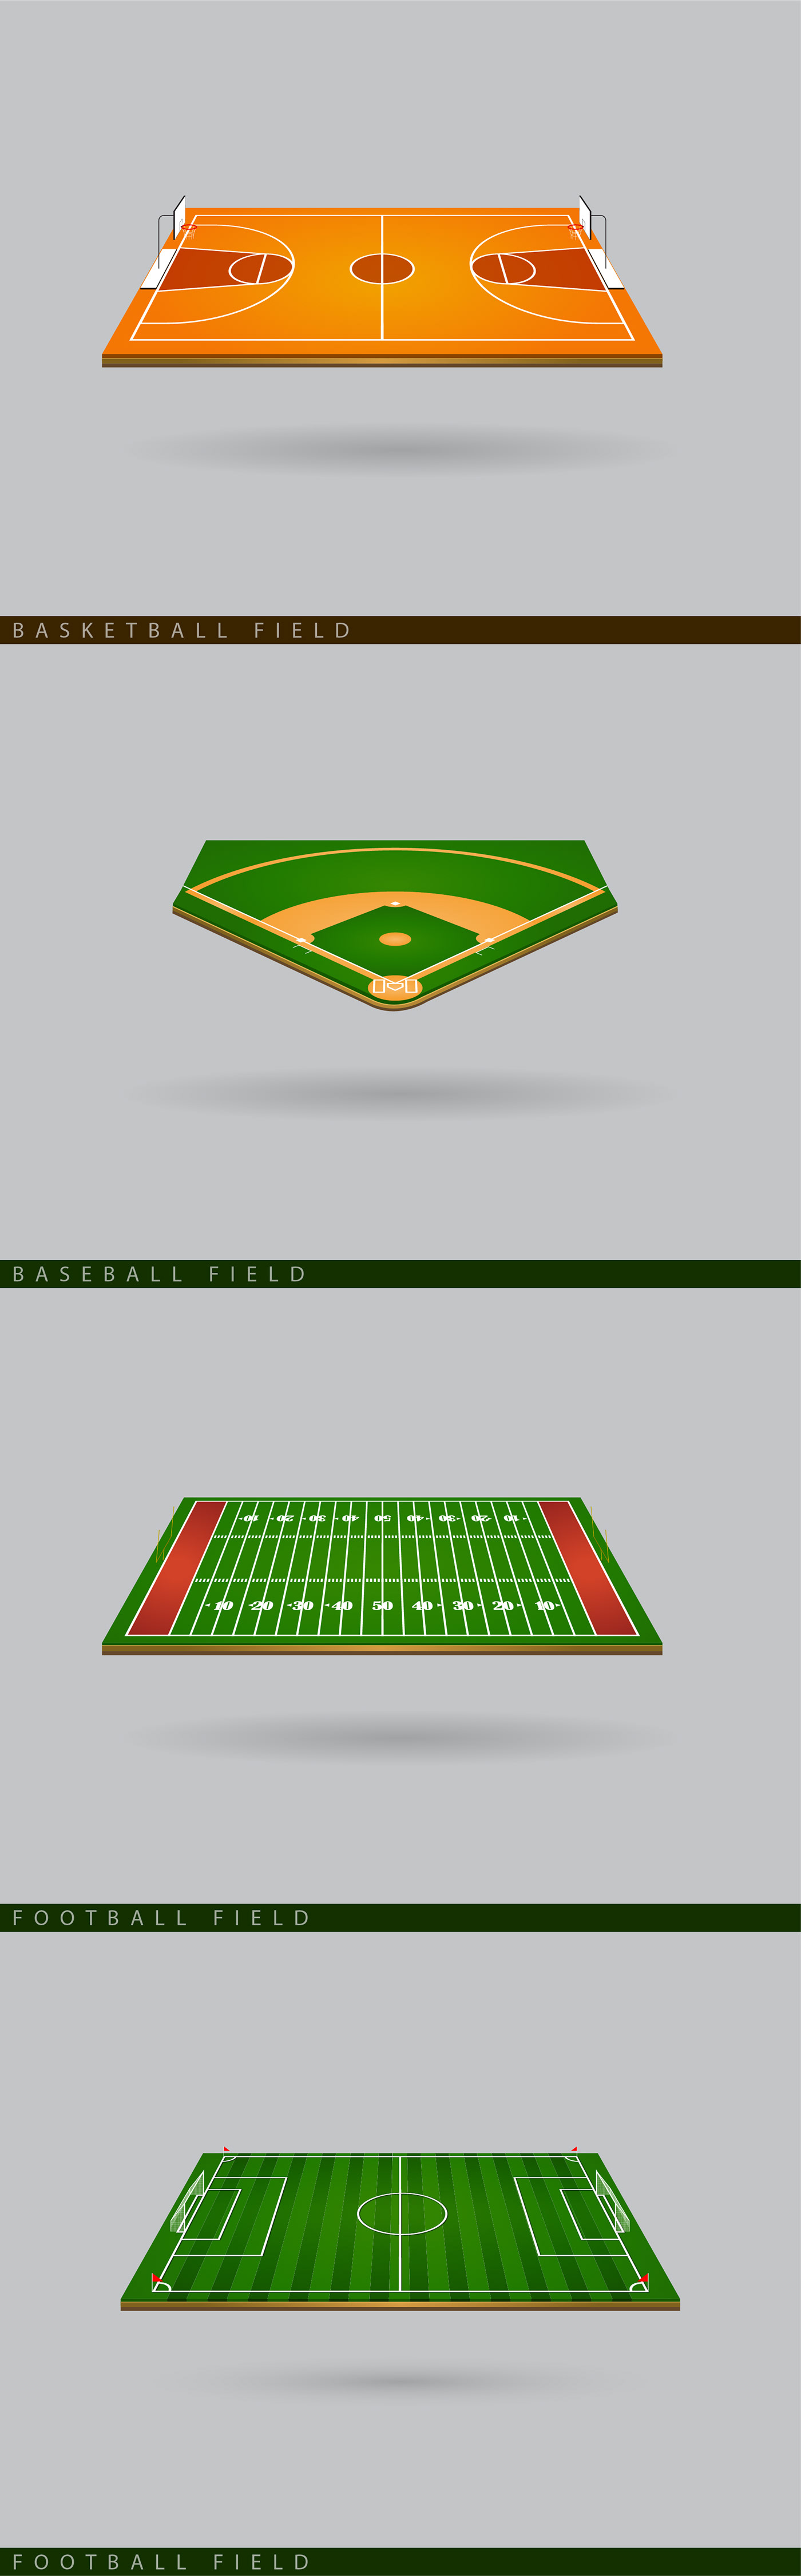 field 3D illustration football field basket ball field baseball field rugby field Isometric 3D